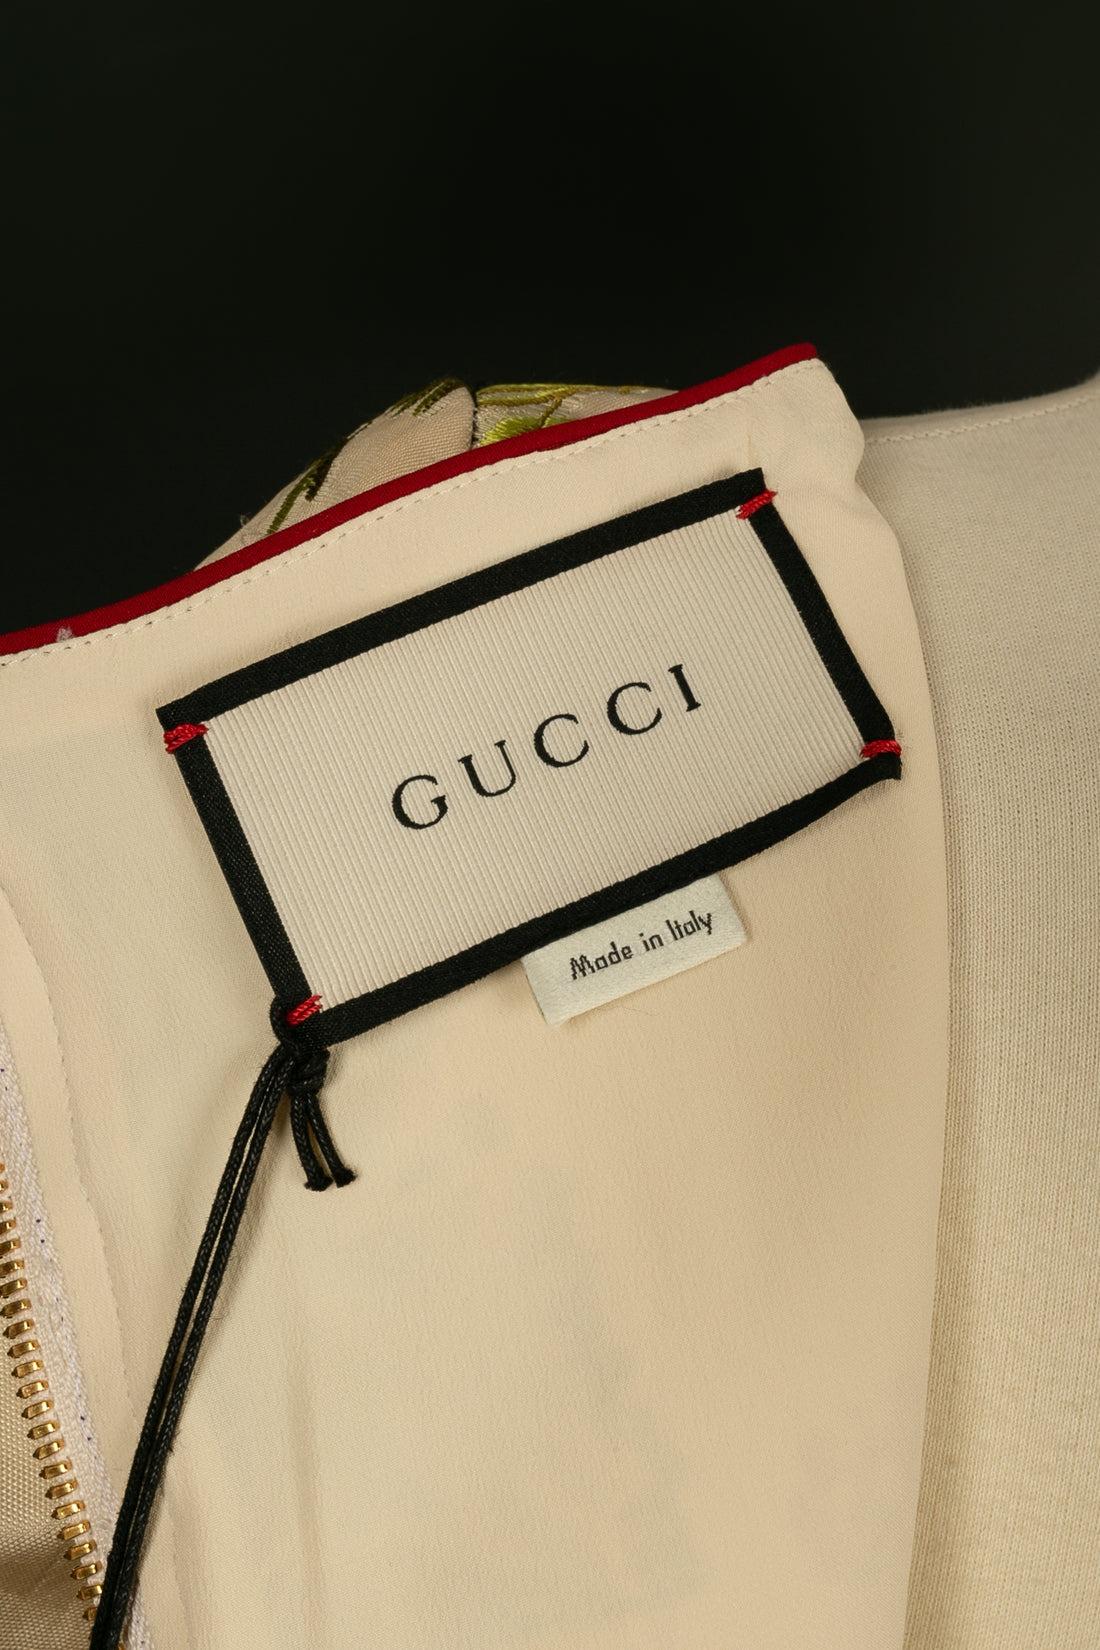 Robe mi-longue Pre-Fall à motifs floraux, Gucci, 2016 en vente 5